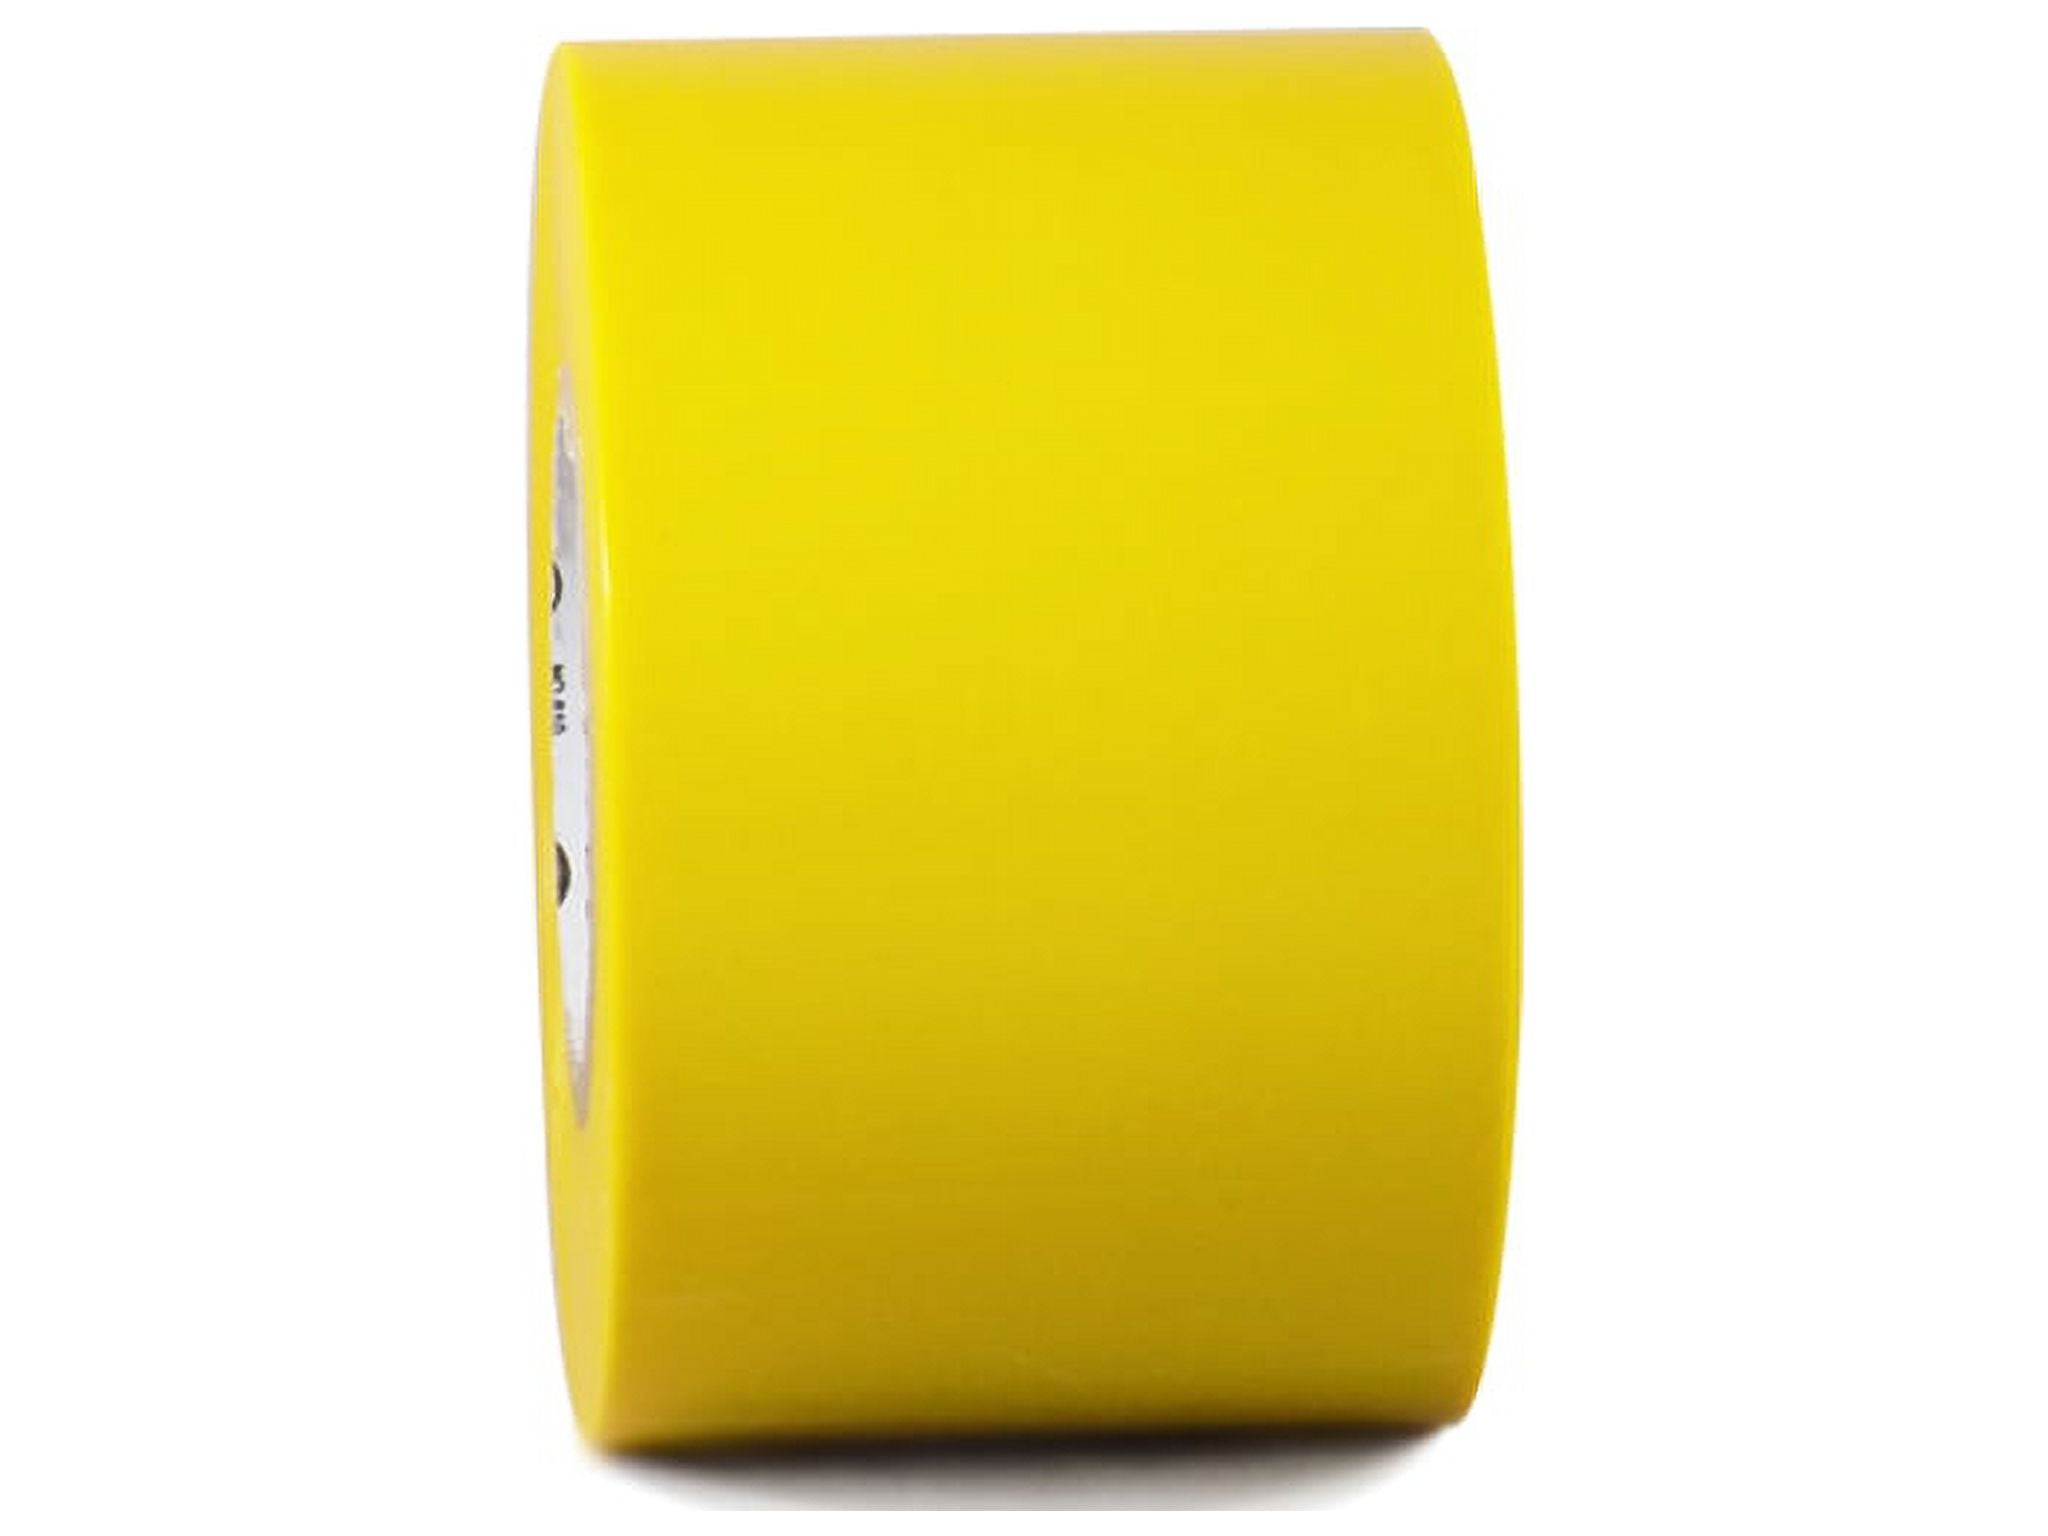 560105-Y - RPI Color Coded Multi-Purpose Laboratory Tape, 3 Inch Core, 1  Inch Wide, 2,160 Inches per Roll, Yellow